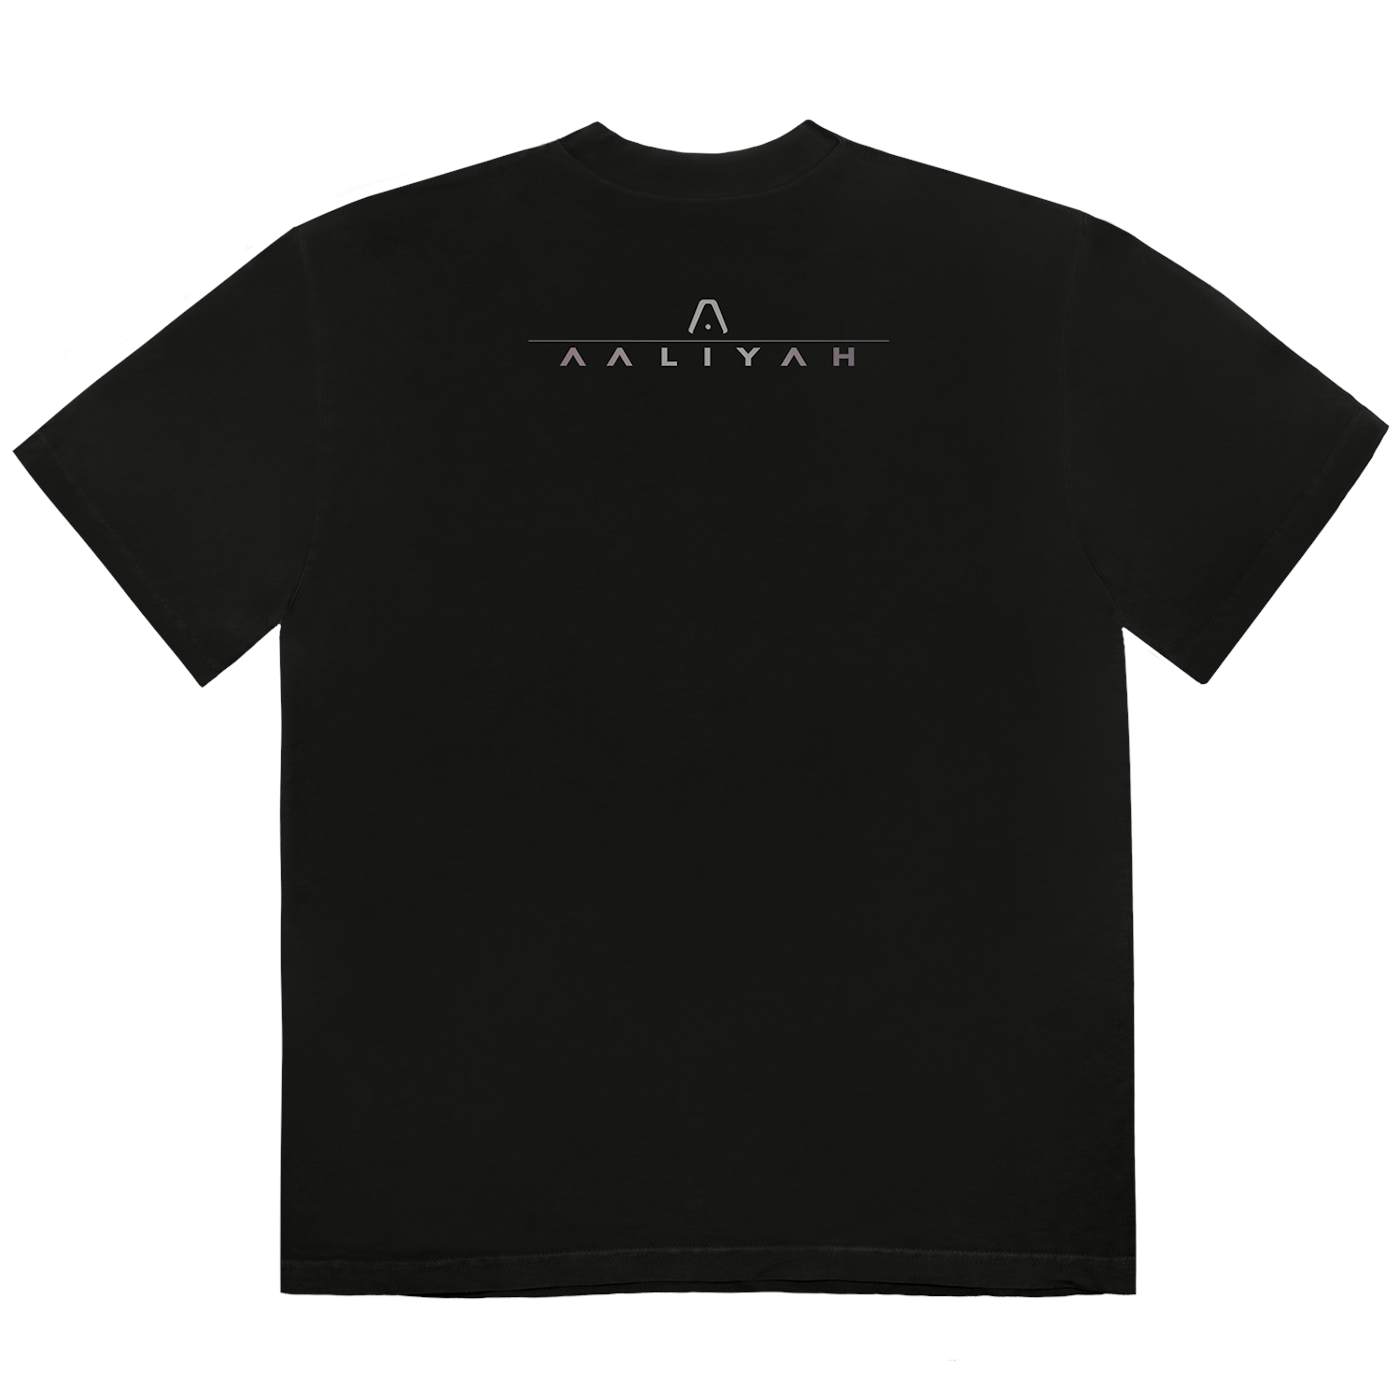 Aaliyah Self Titled Portrait T-Shirt